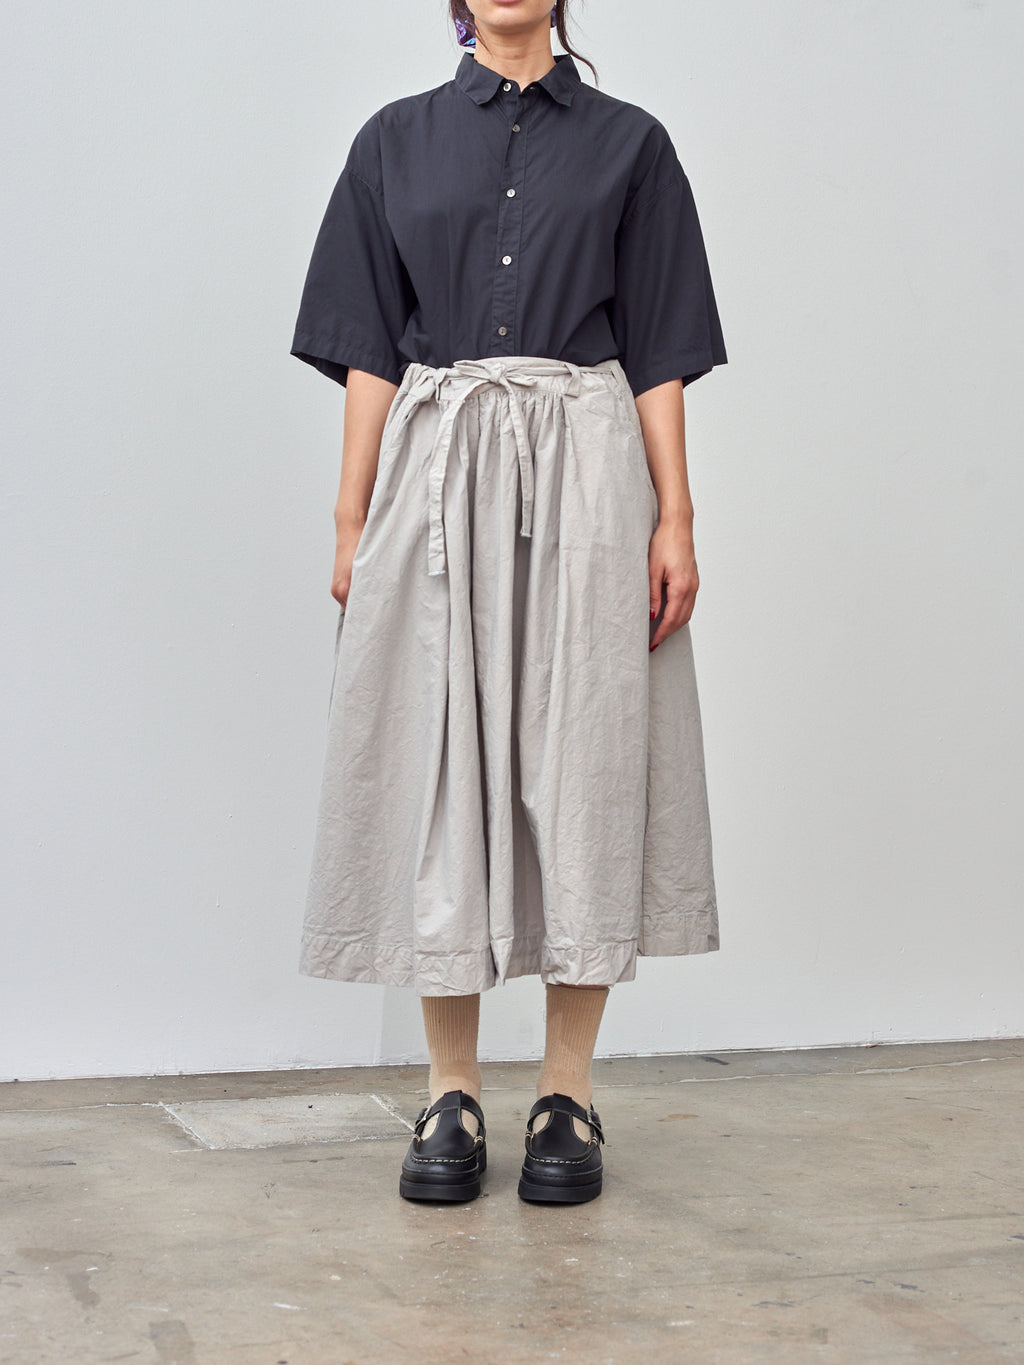 Namu Shop - Veritecoeur Daily Skirt - Smoke Gray